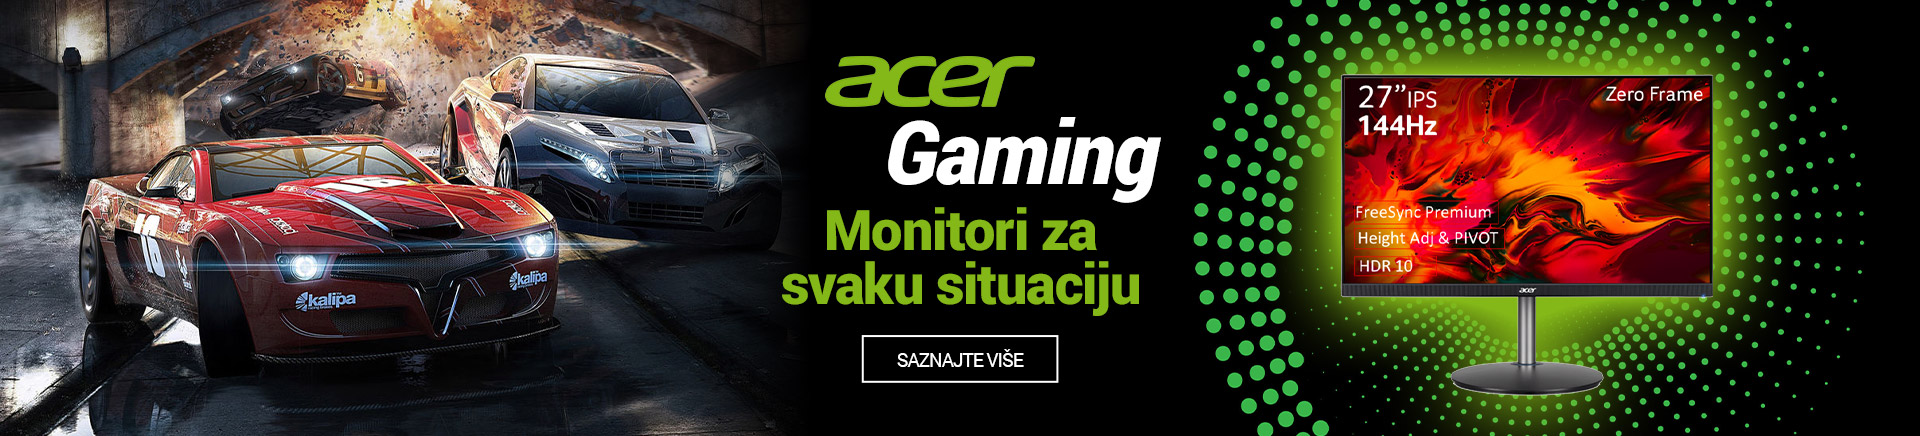 HR Acer gaming - Monitori za svaku situaciju MOBILE 380 X 436.jpg